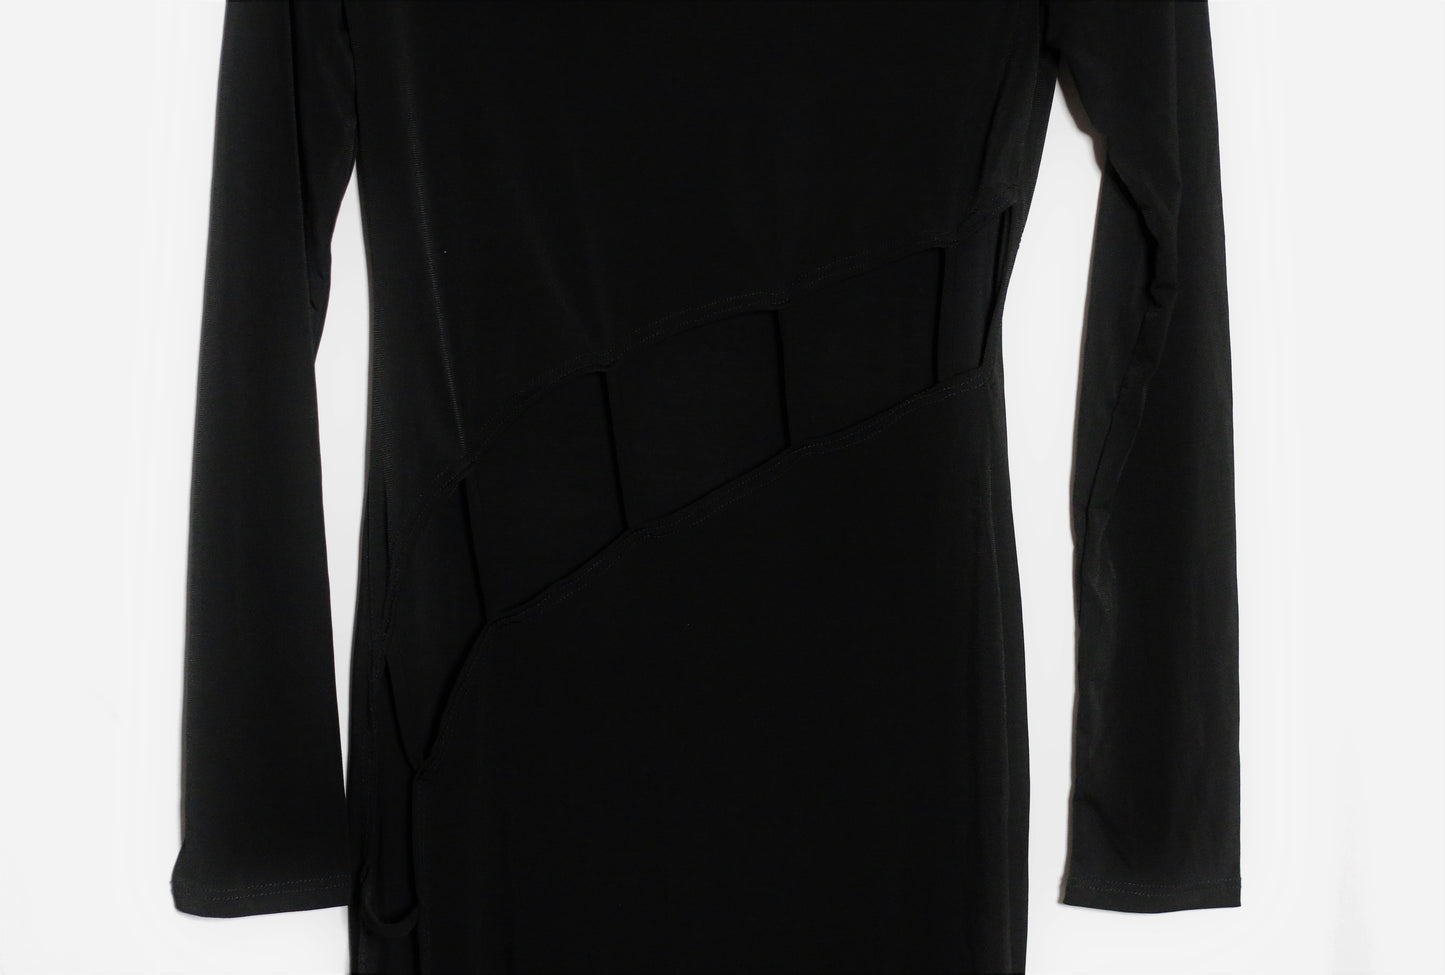 Black Long Sleeve Cut Out Maxi Dress